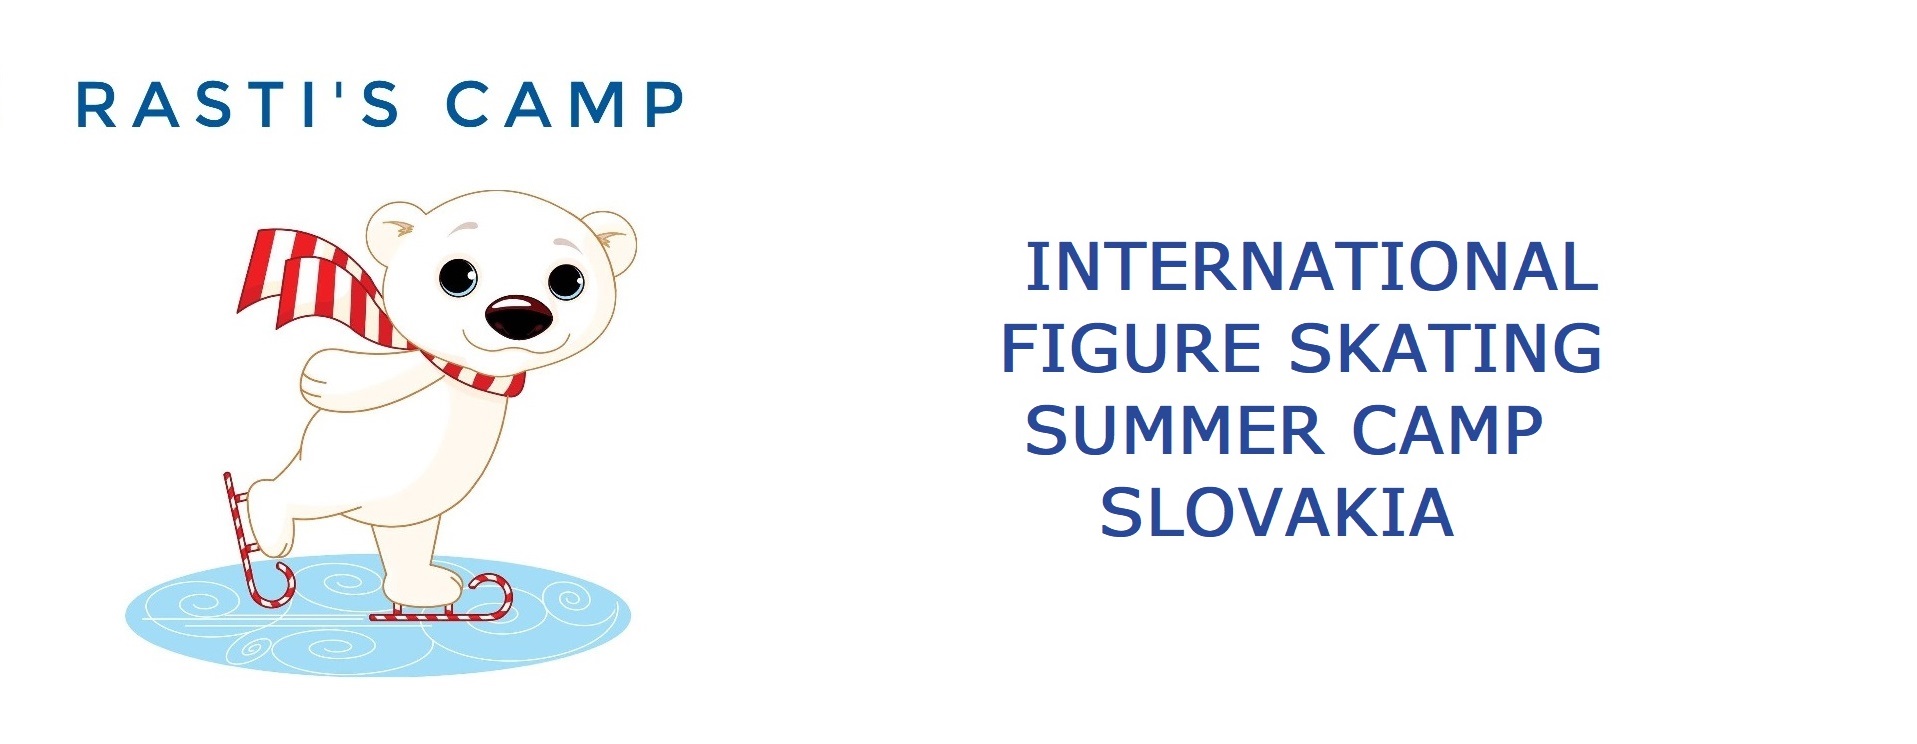 RASTI´S FIGURE SKATING SUMMER CAMP in Slovakia